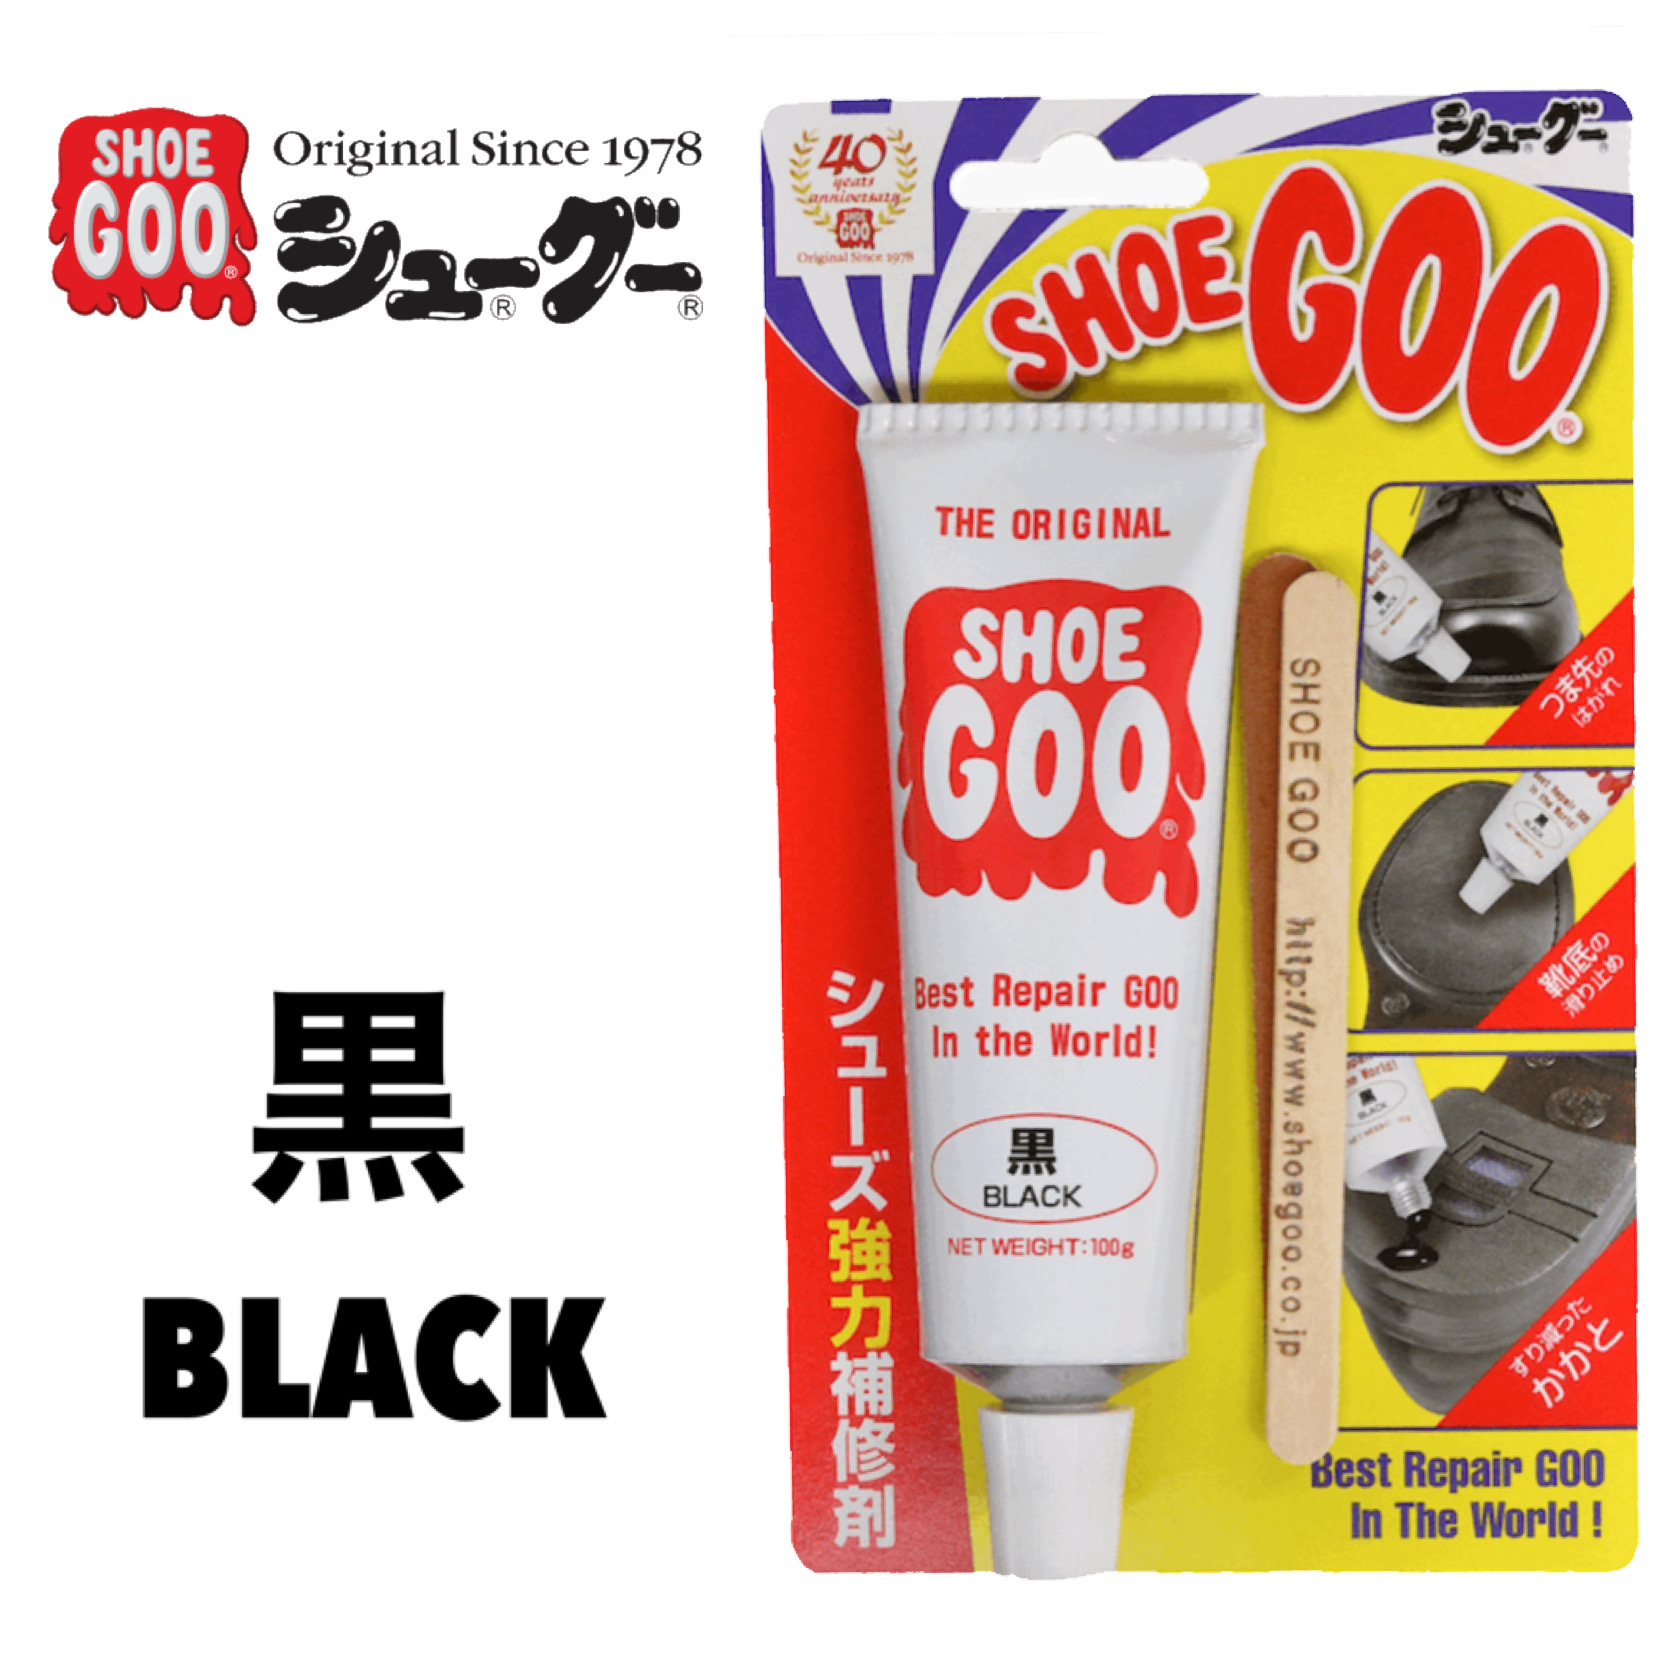 SHOE GOO シューグー BLACK ブラック 黒 l1n8TBLRDa - apoyogepeese.com.ar